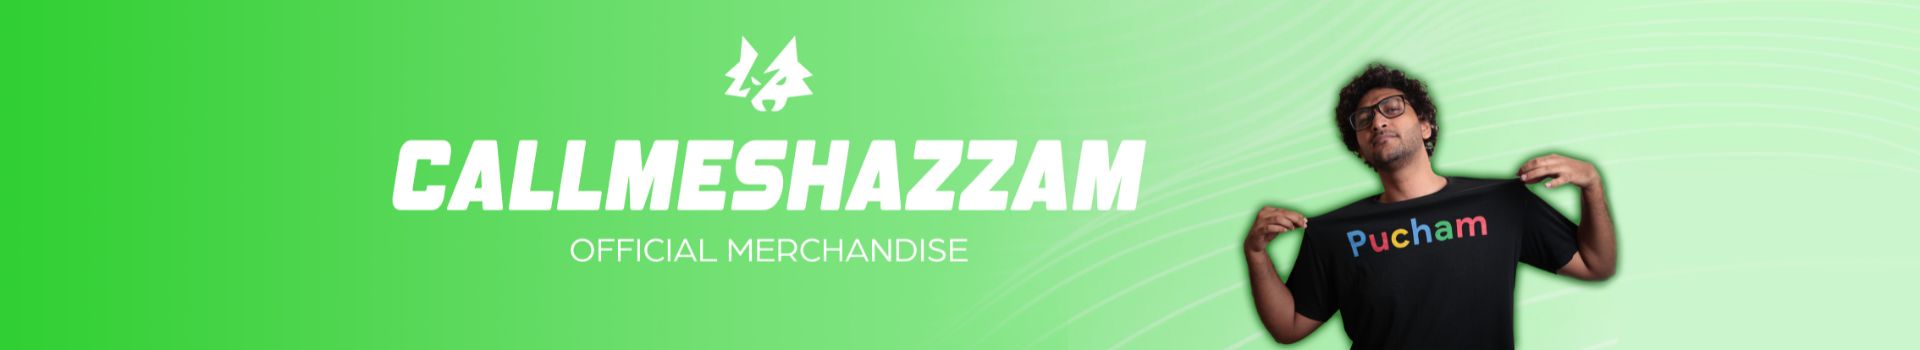 CallMeShazzam Merchandise